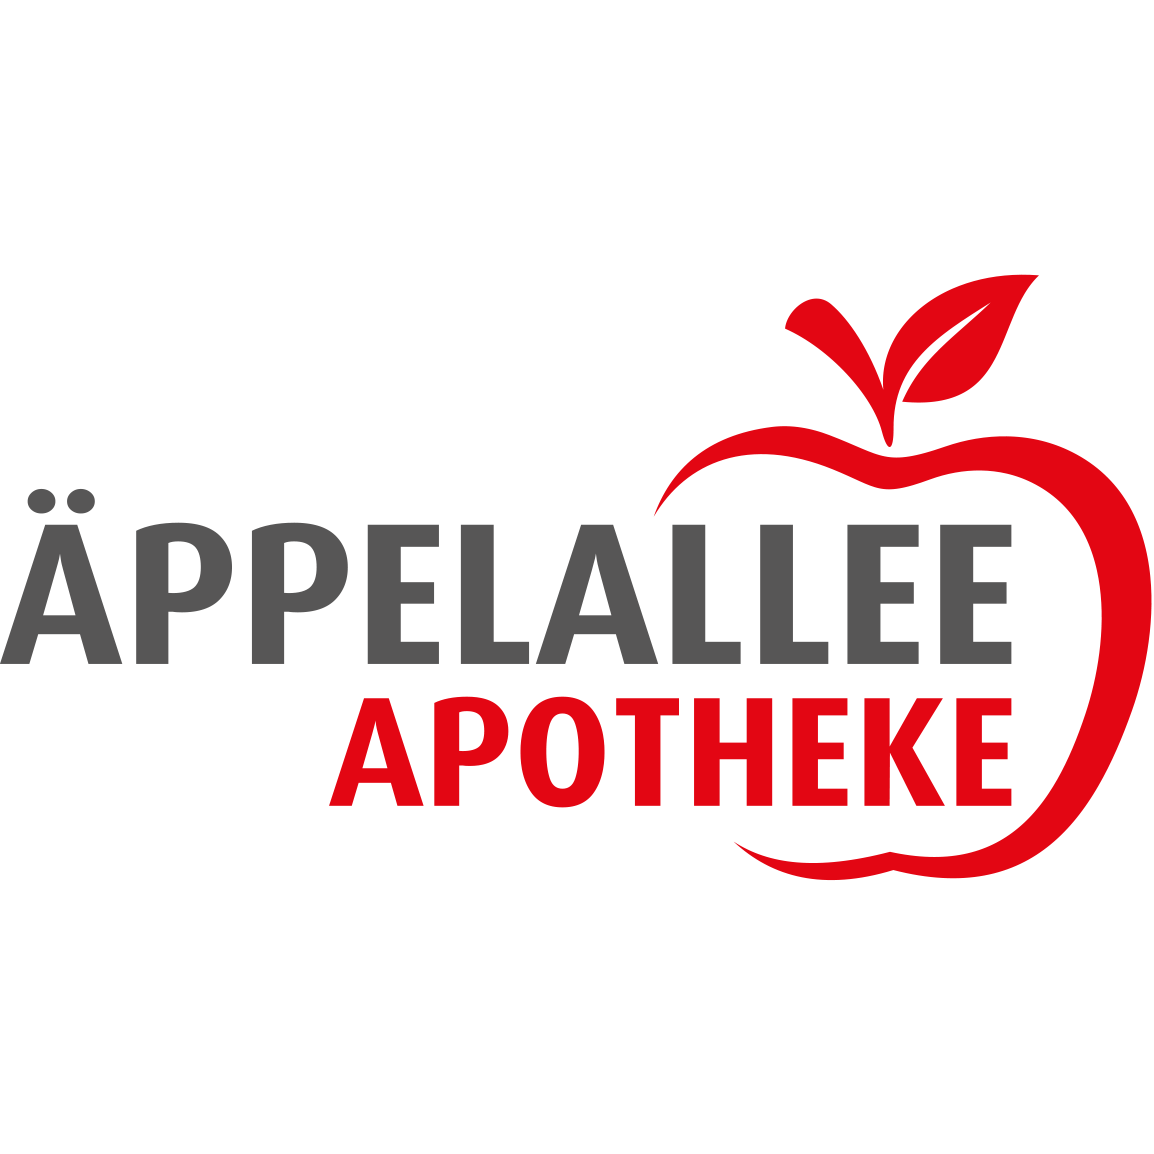 Äppelallee Apotheke in Wiesbaden - Logo